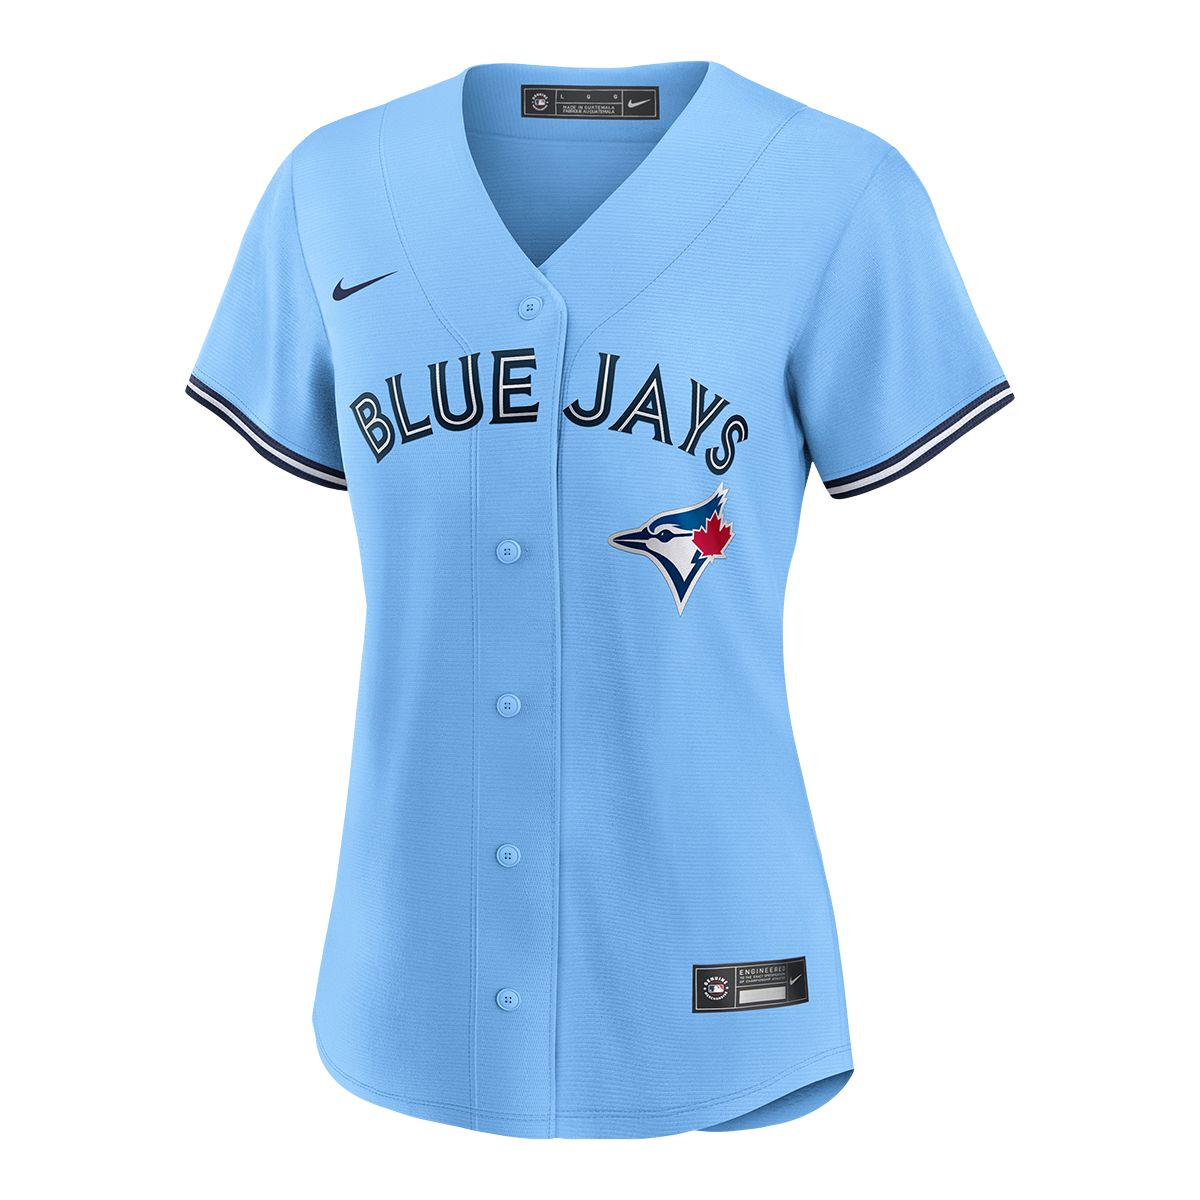 Toronto Blue Jays Nike Bo Bichette Jersey, Toddler, Baseball, MLB